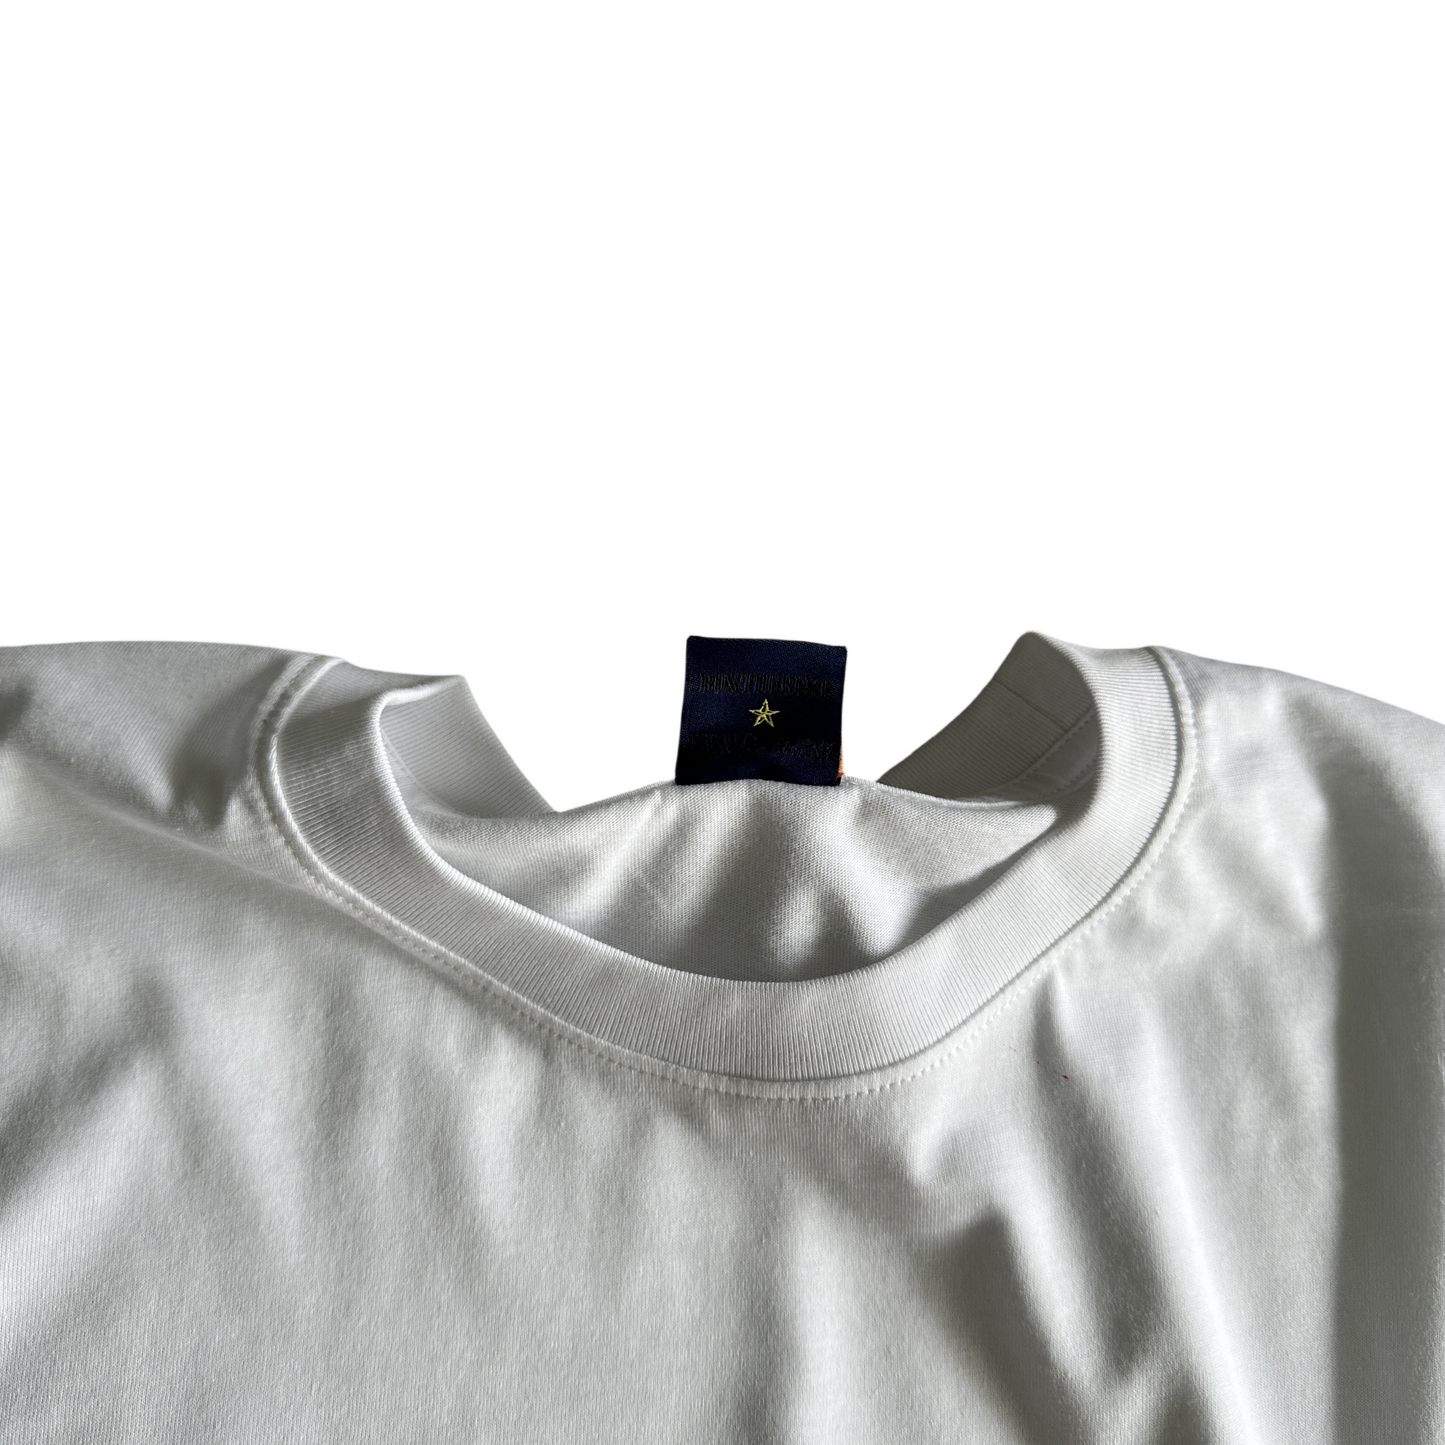 Corteiz Alcatraz Heart Tee  Short Sleeve T-shirt - WHITE/PINK